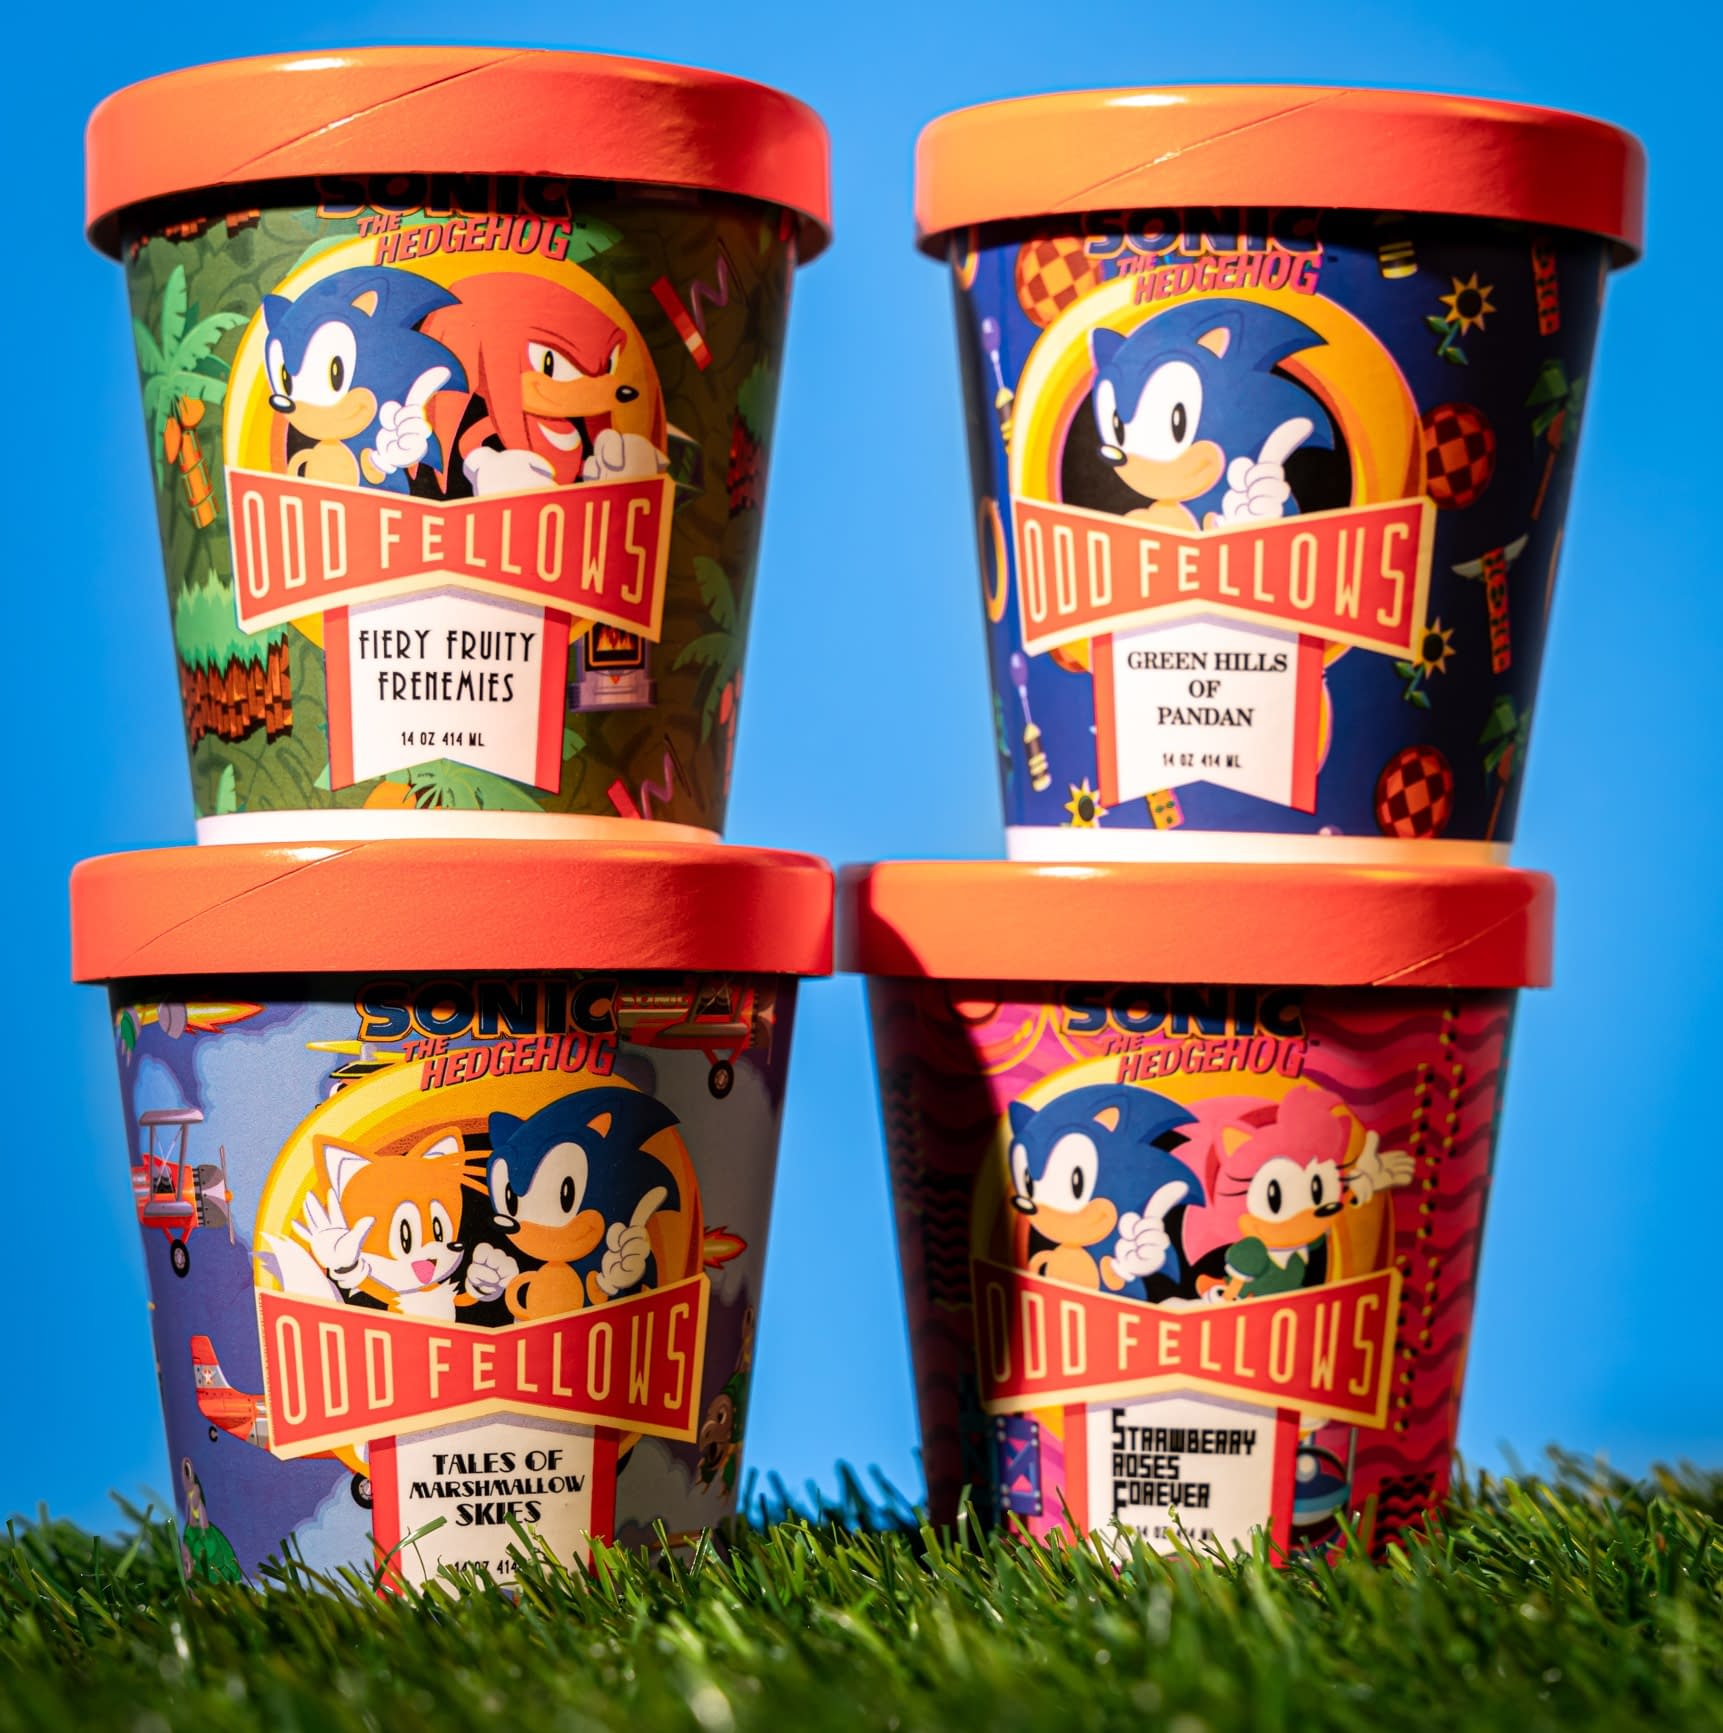 Scoop Up 'Sonic' OddFellows Ice Cream